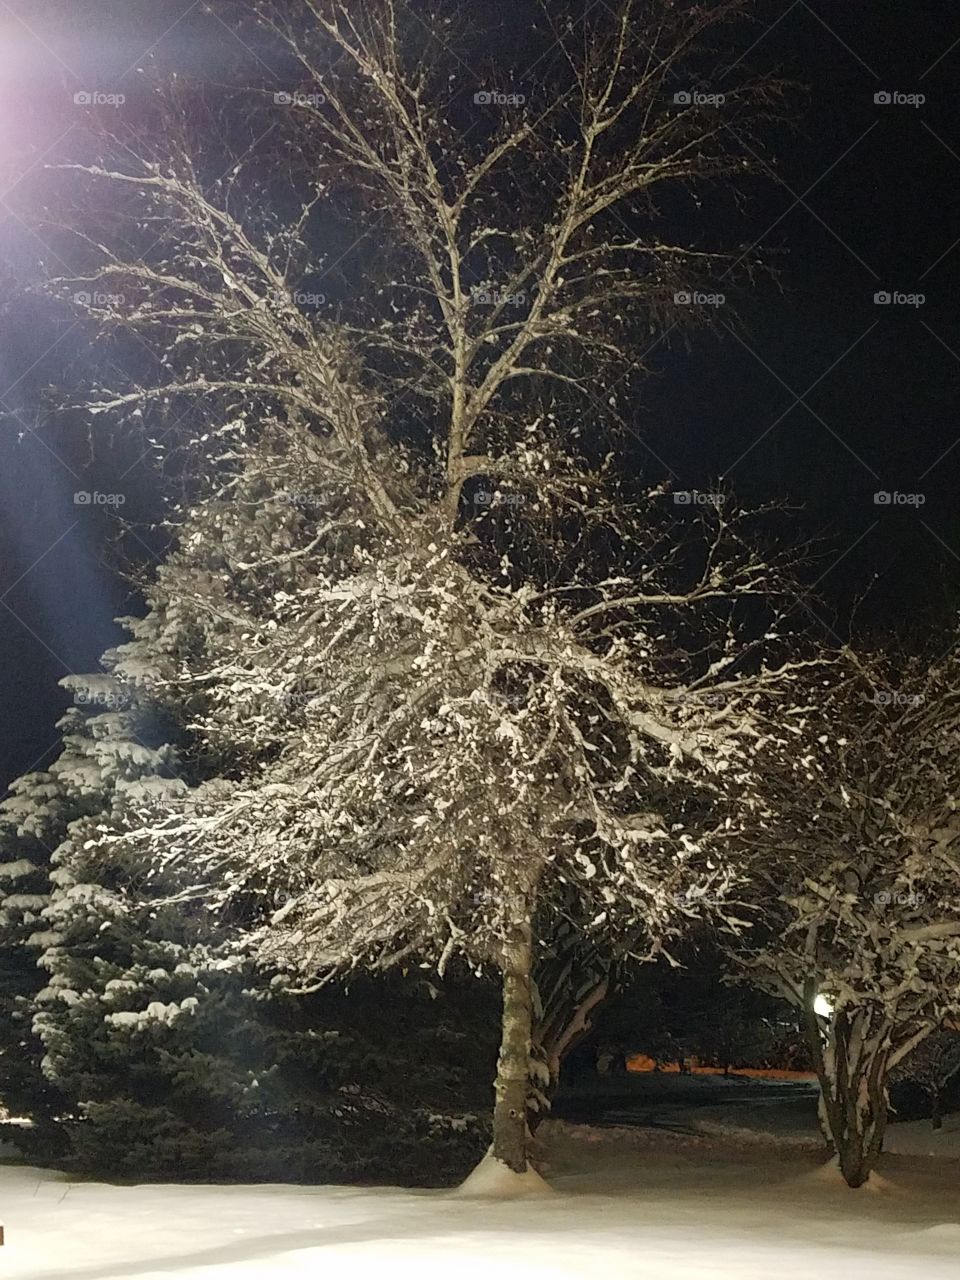 Fresh snow on trees